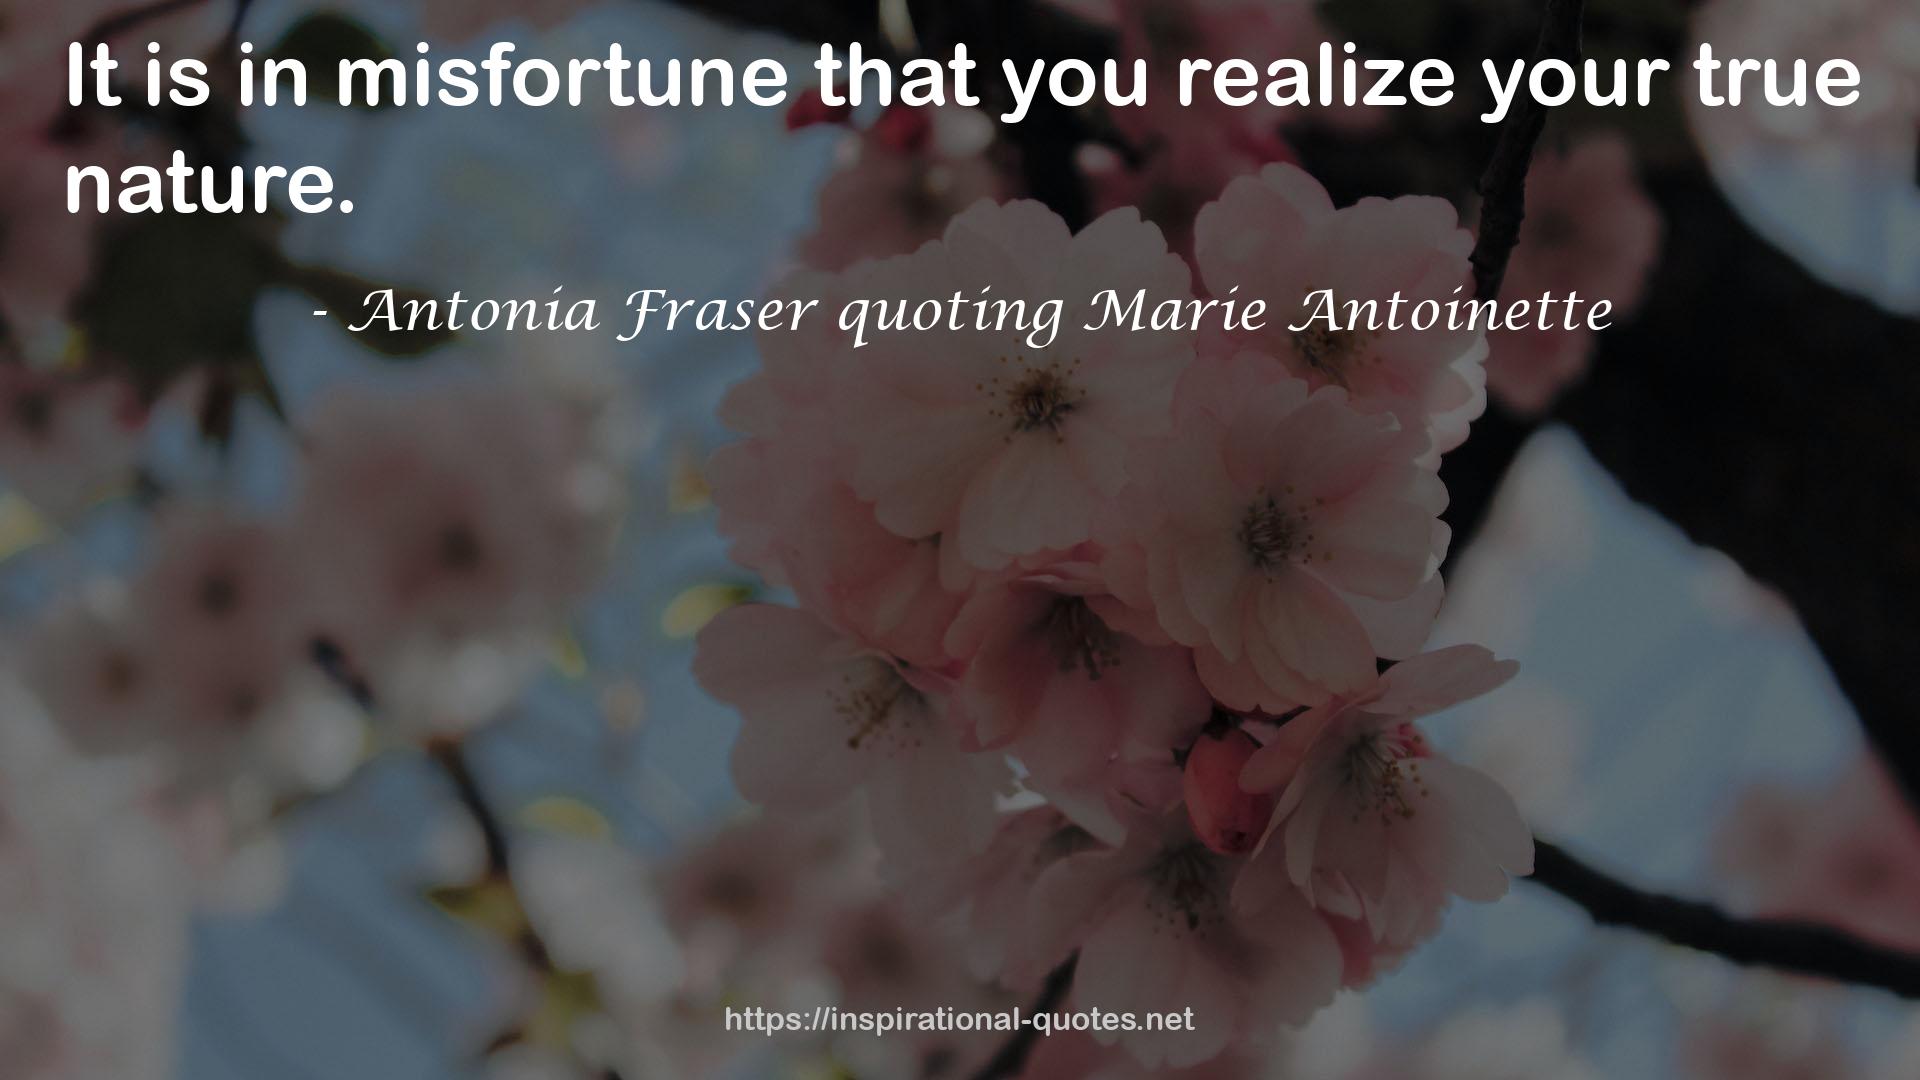 Antonia Fraser quoting Marie Antoinette QUOTES